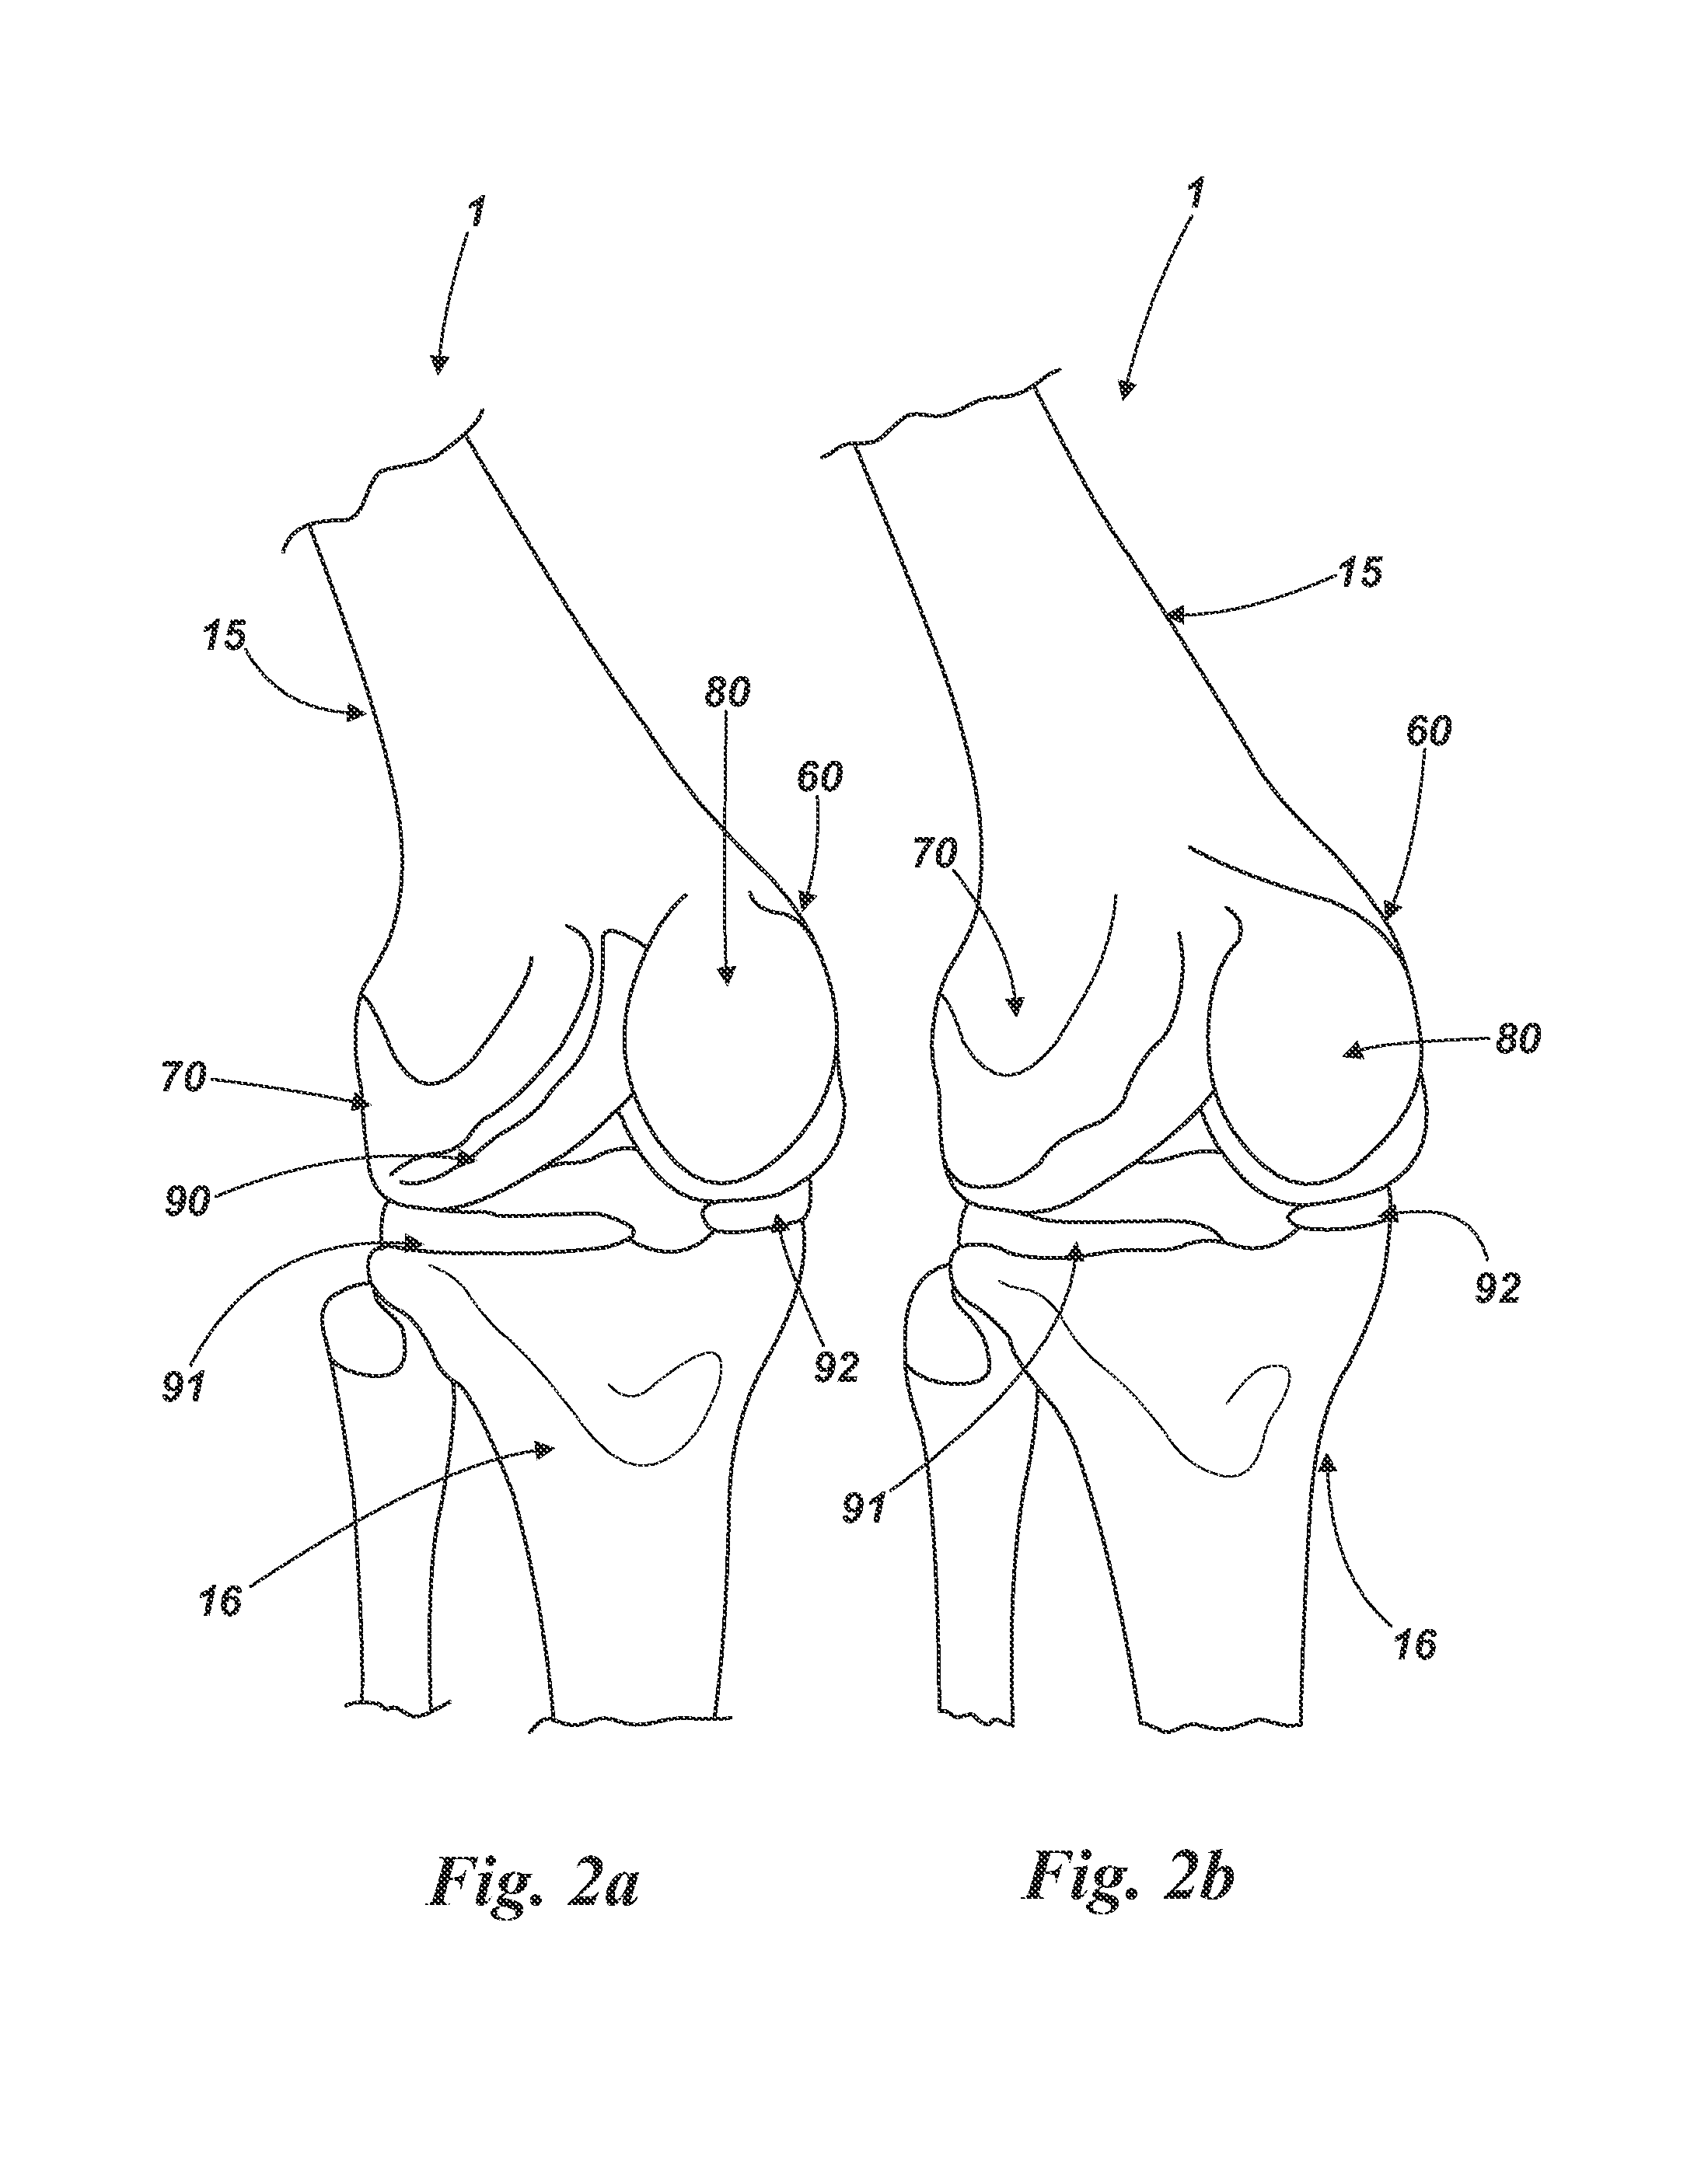 Method of implanting a unicondylar knee prosthesis